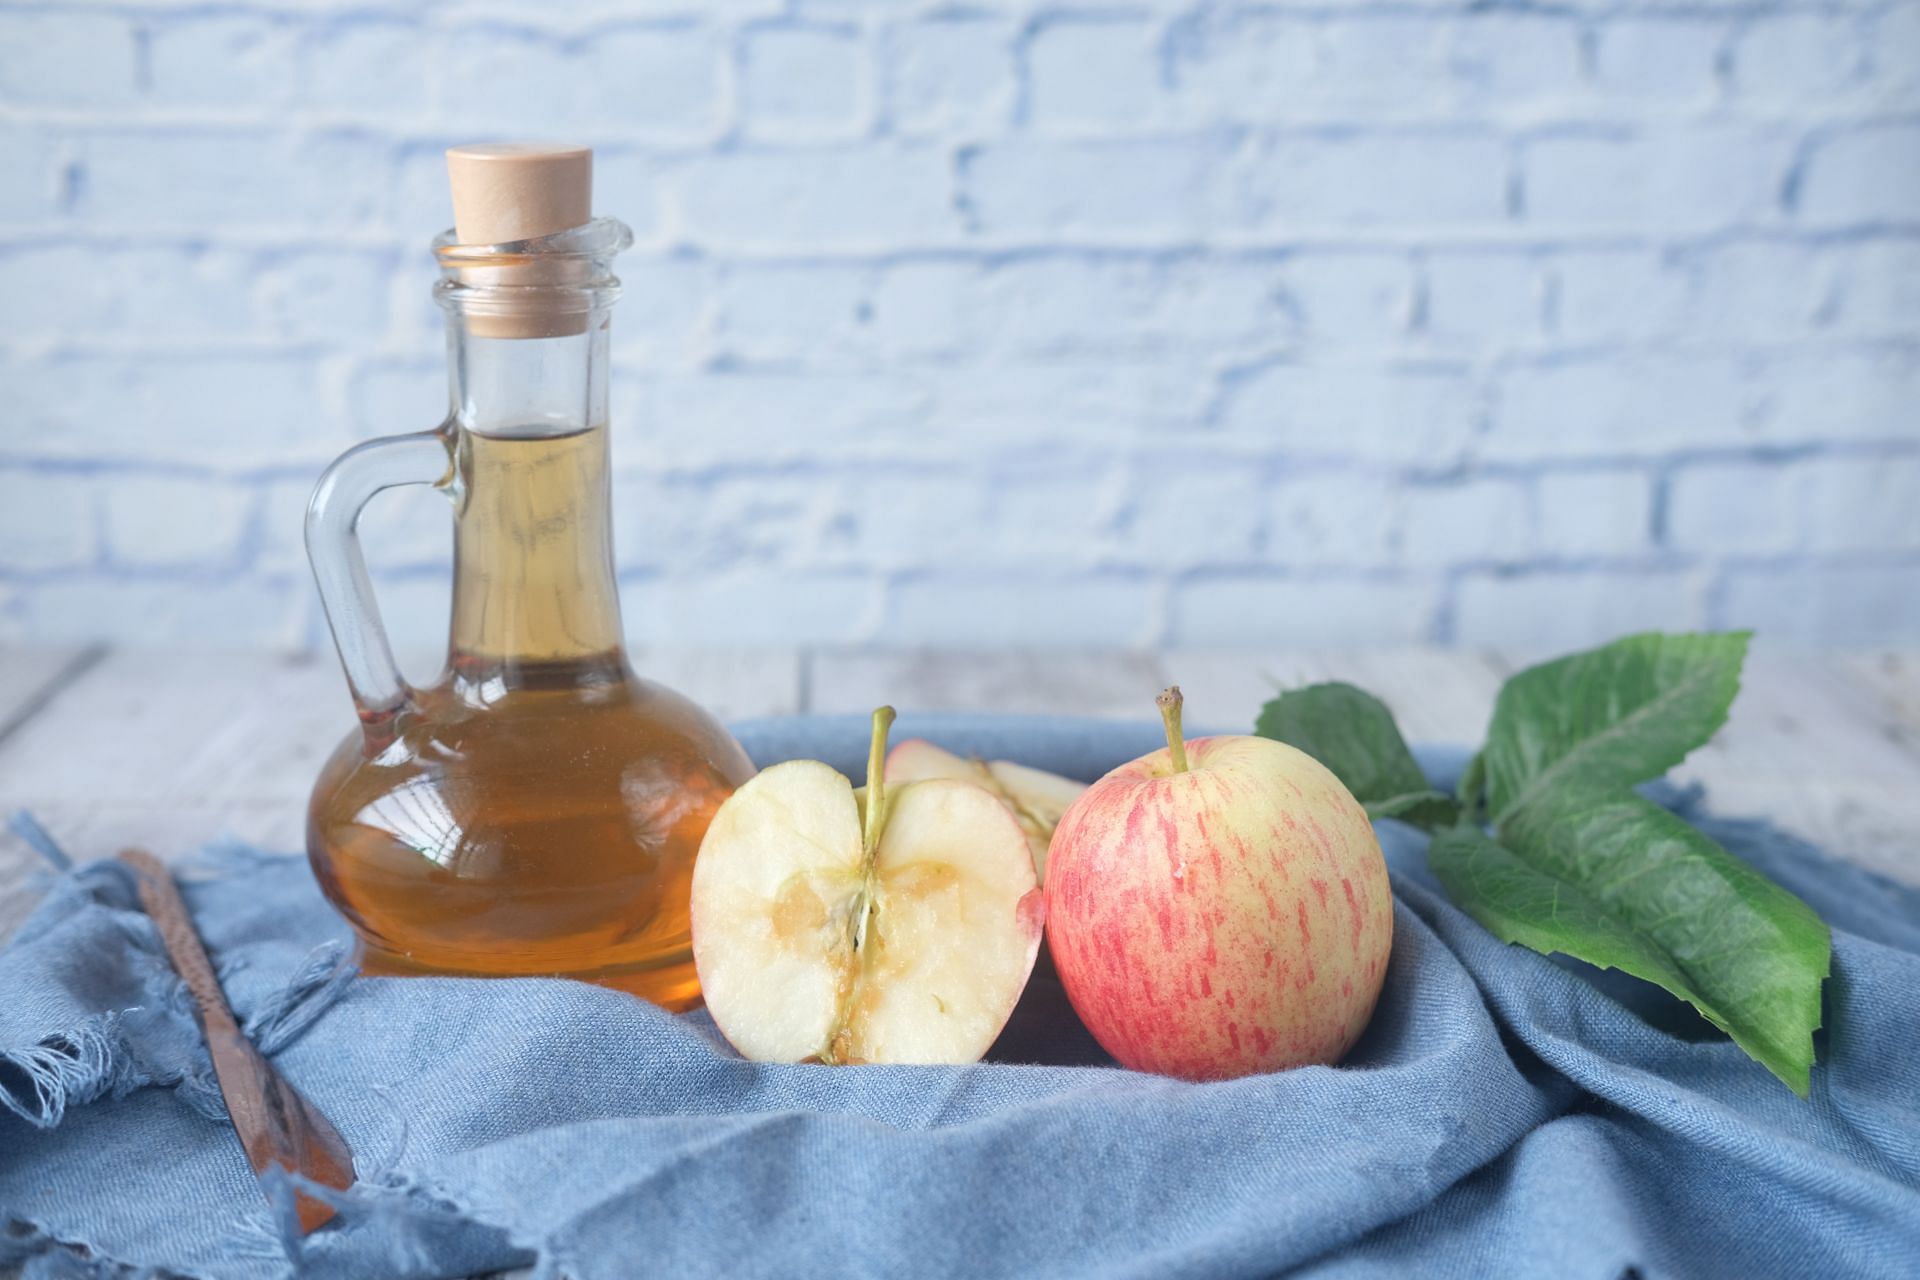 Apple cider vinegar is good for digestion. (Image via Unsplash/Towfiqu Barbhuiya)